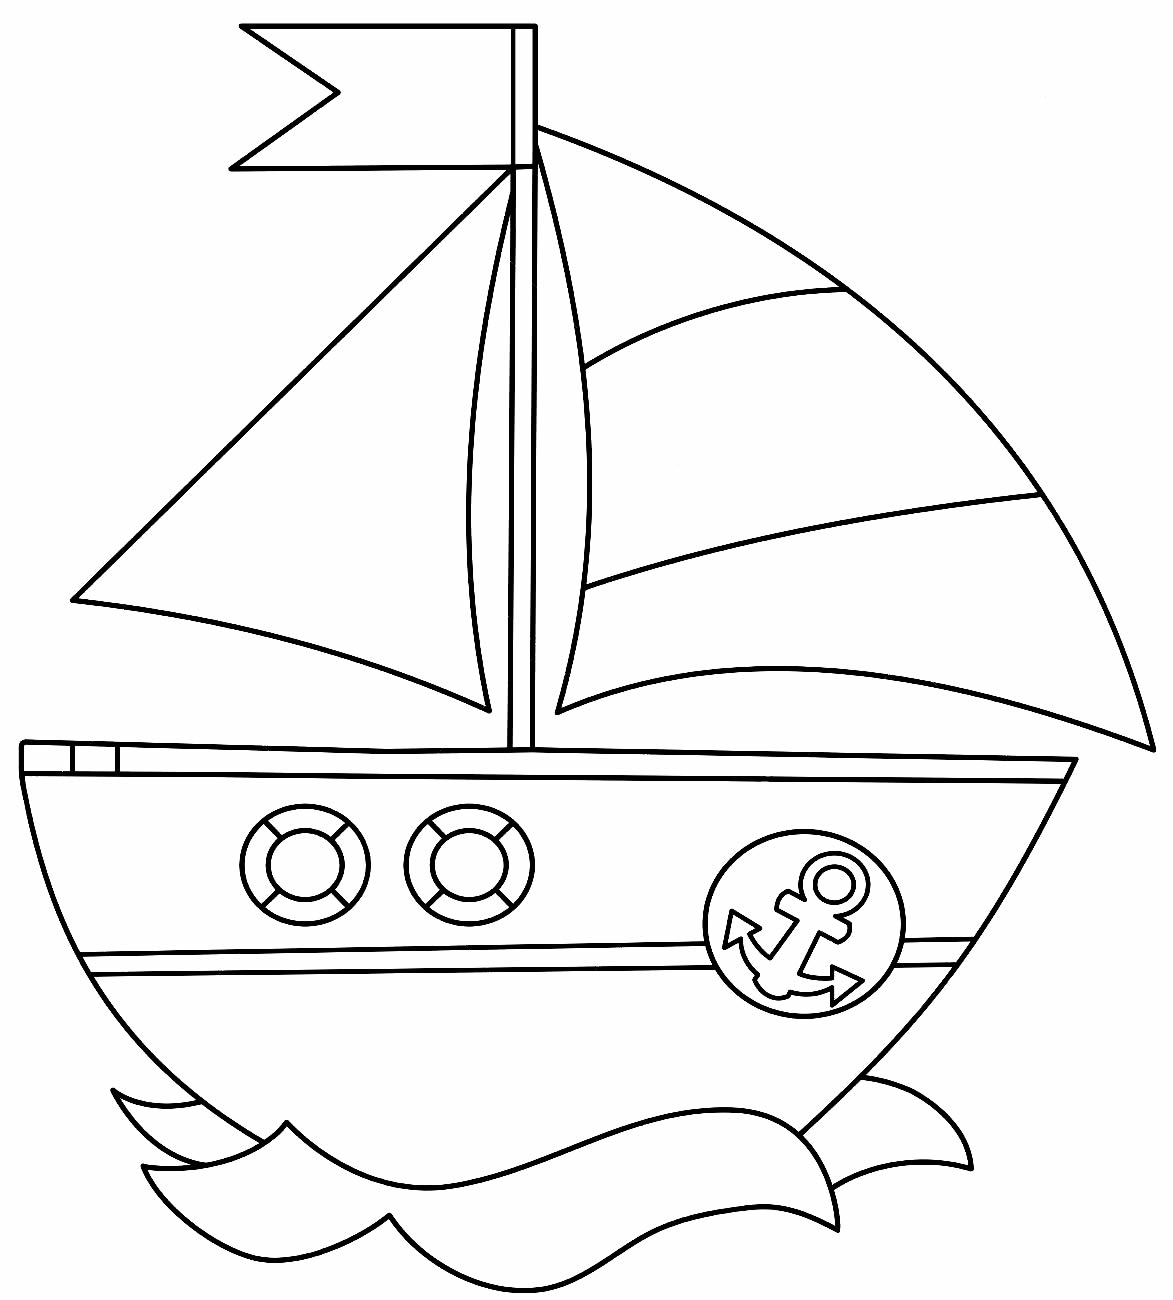 Desenho de barco para colorir